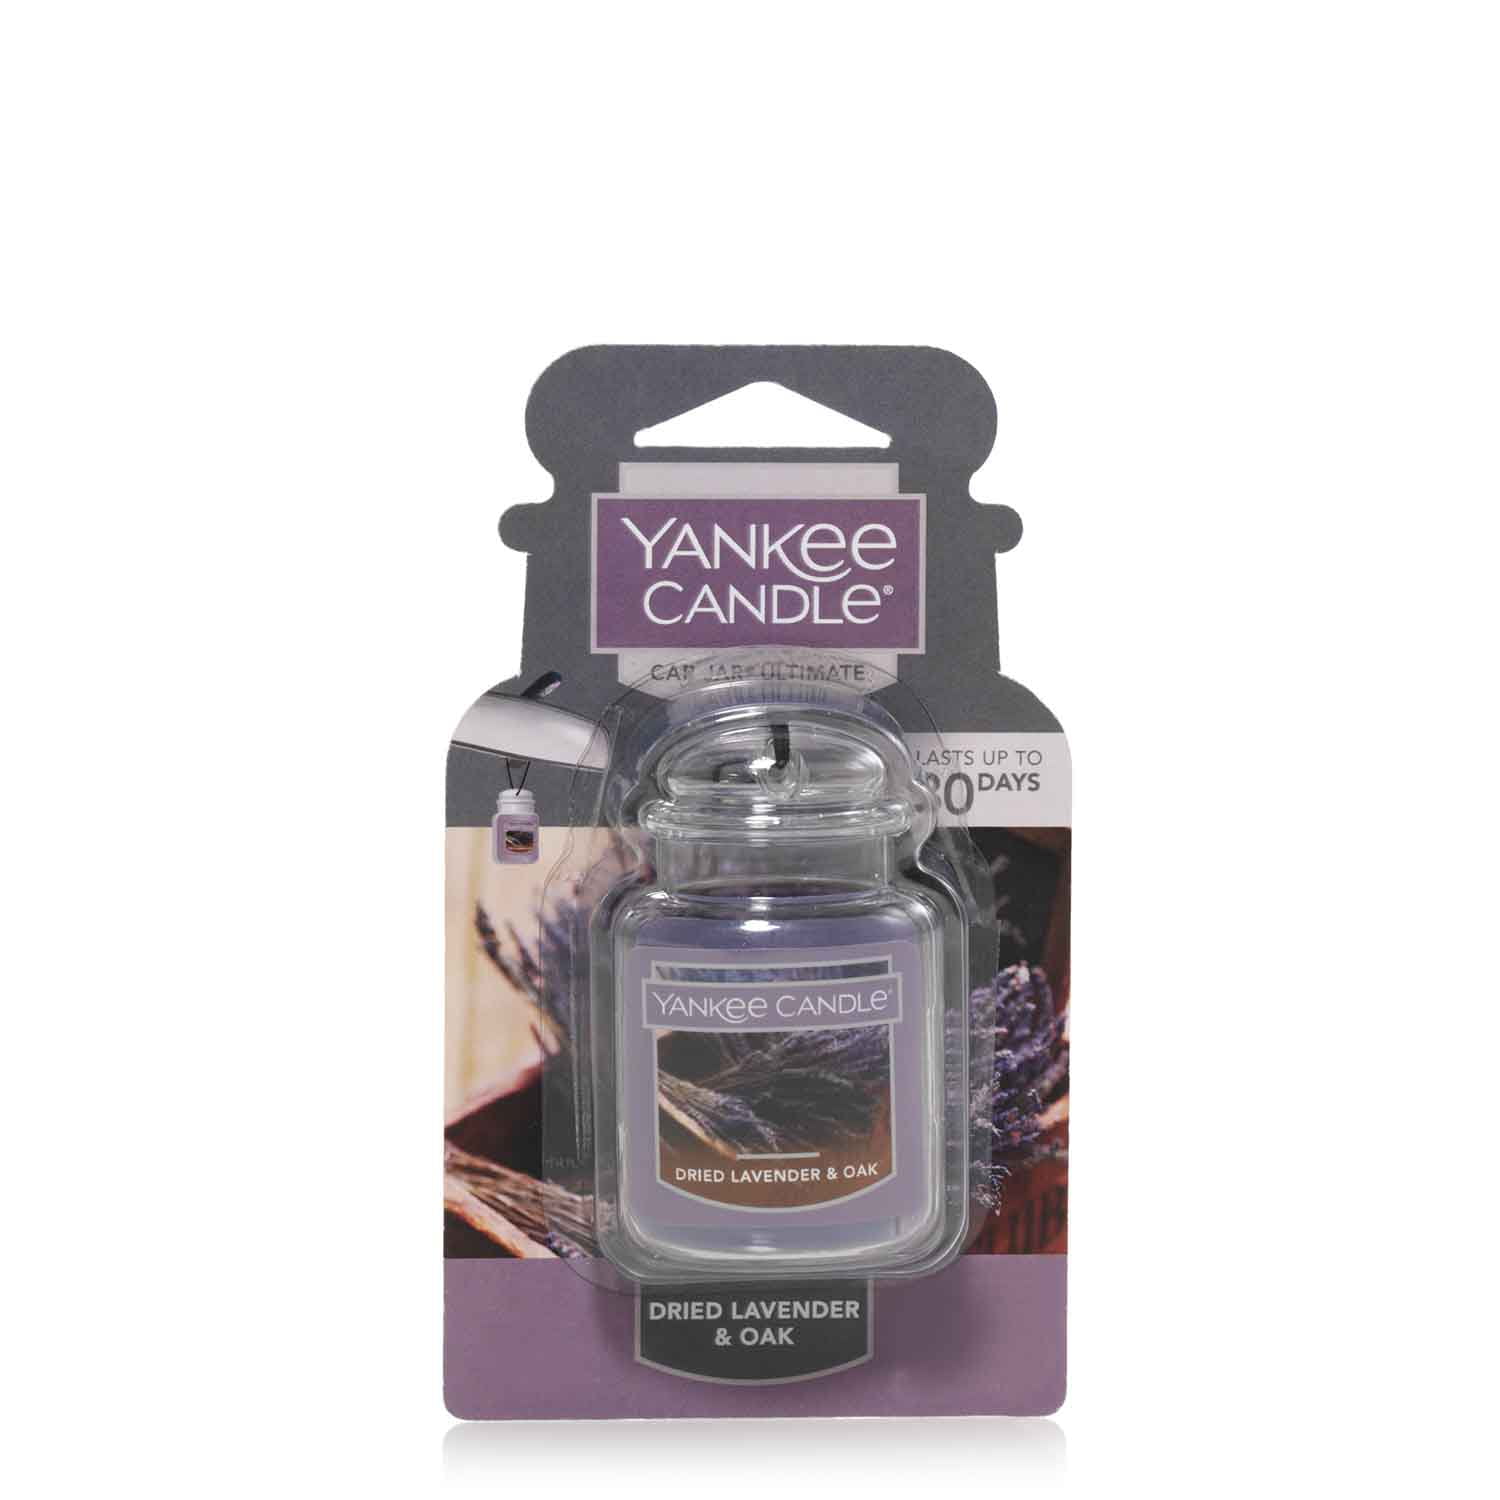 Yankee Candle Car Jar Ultimate Hanging Air Freshener - Dried Lavender and  Oak